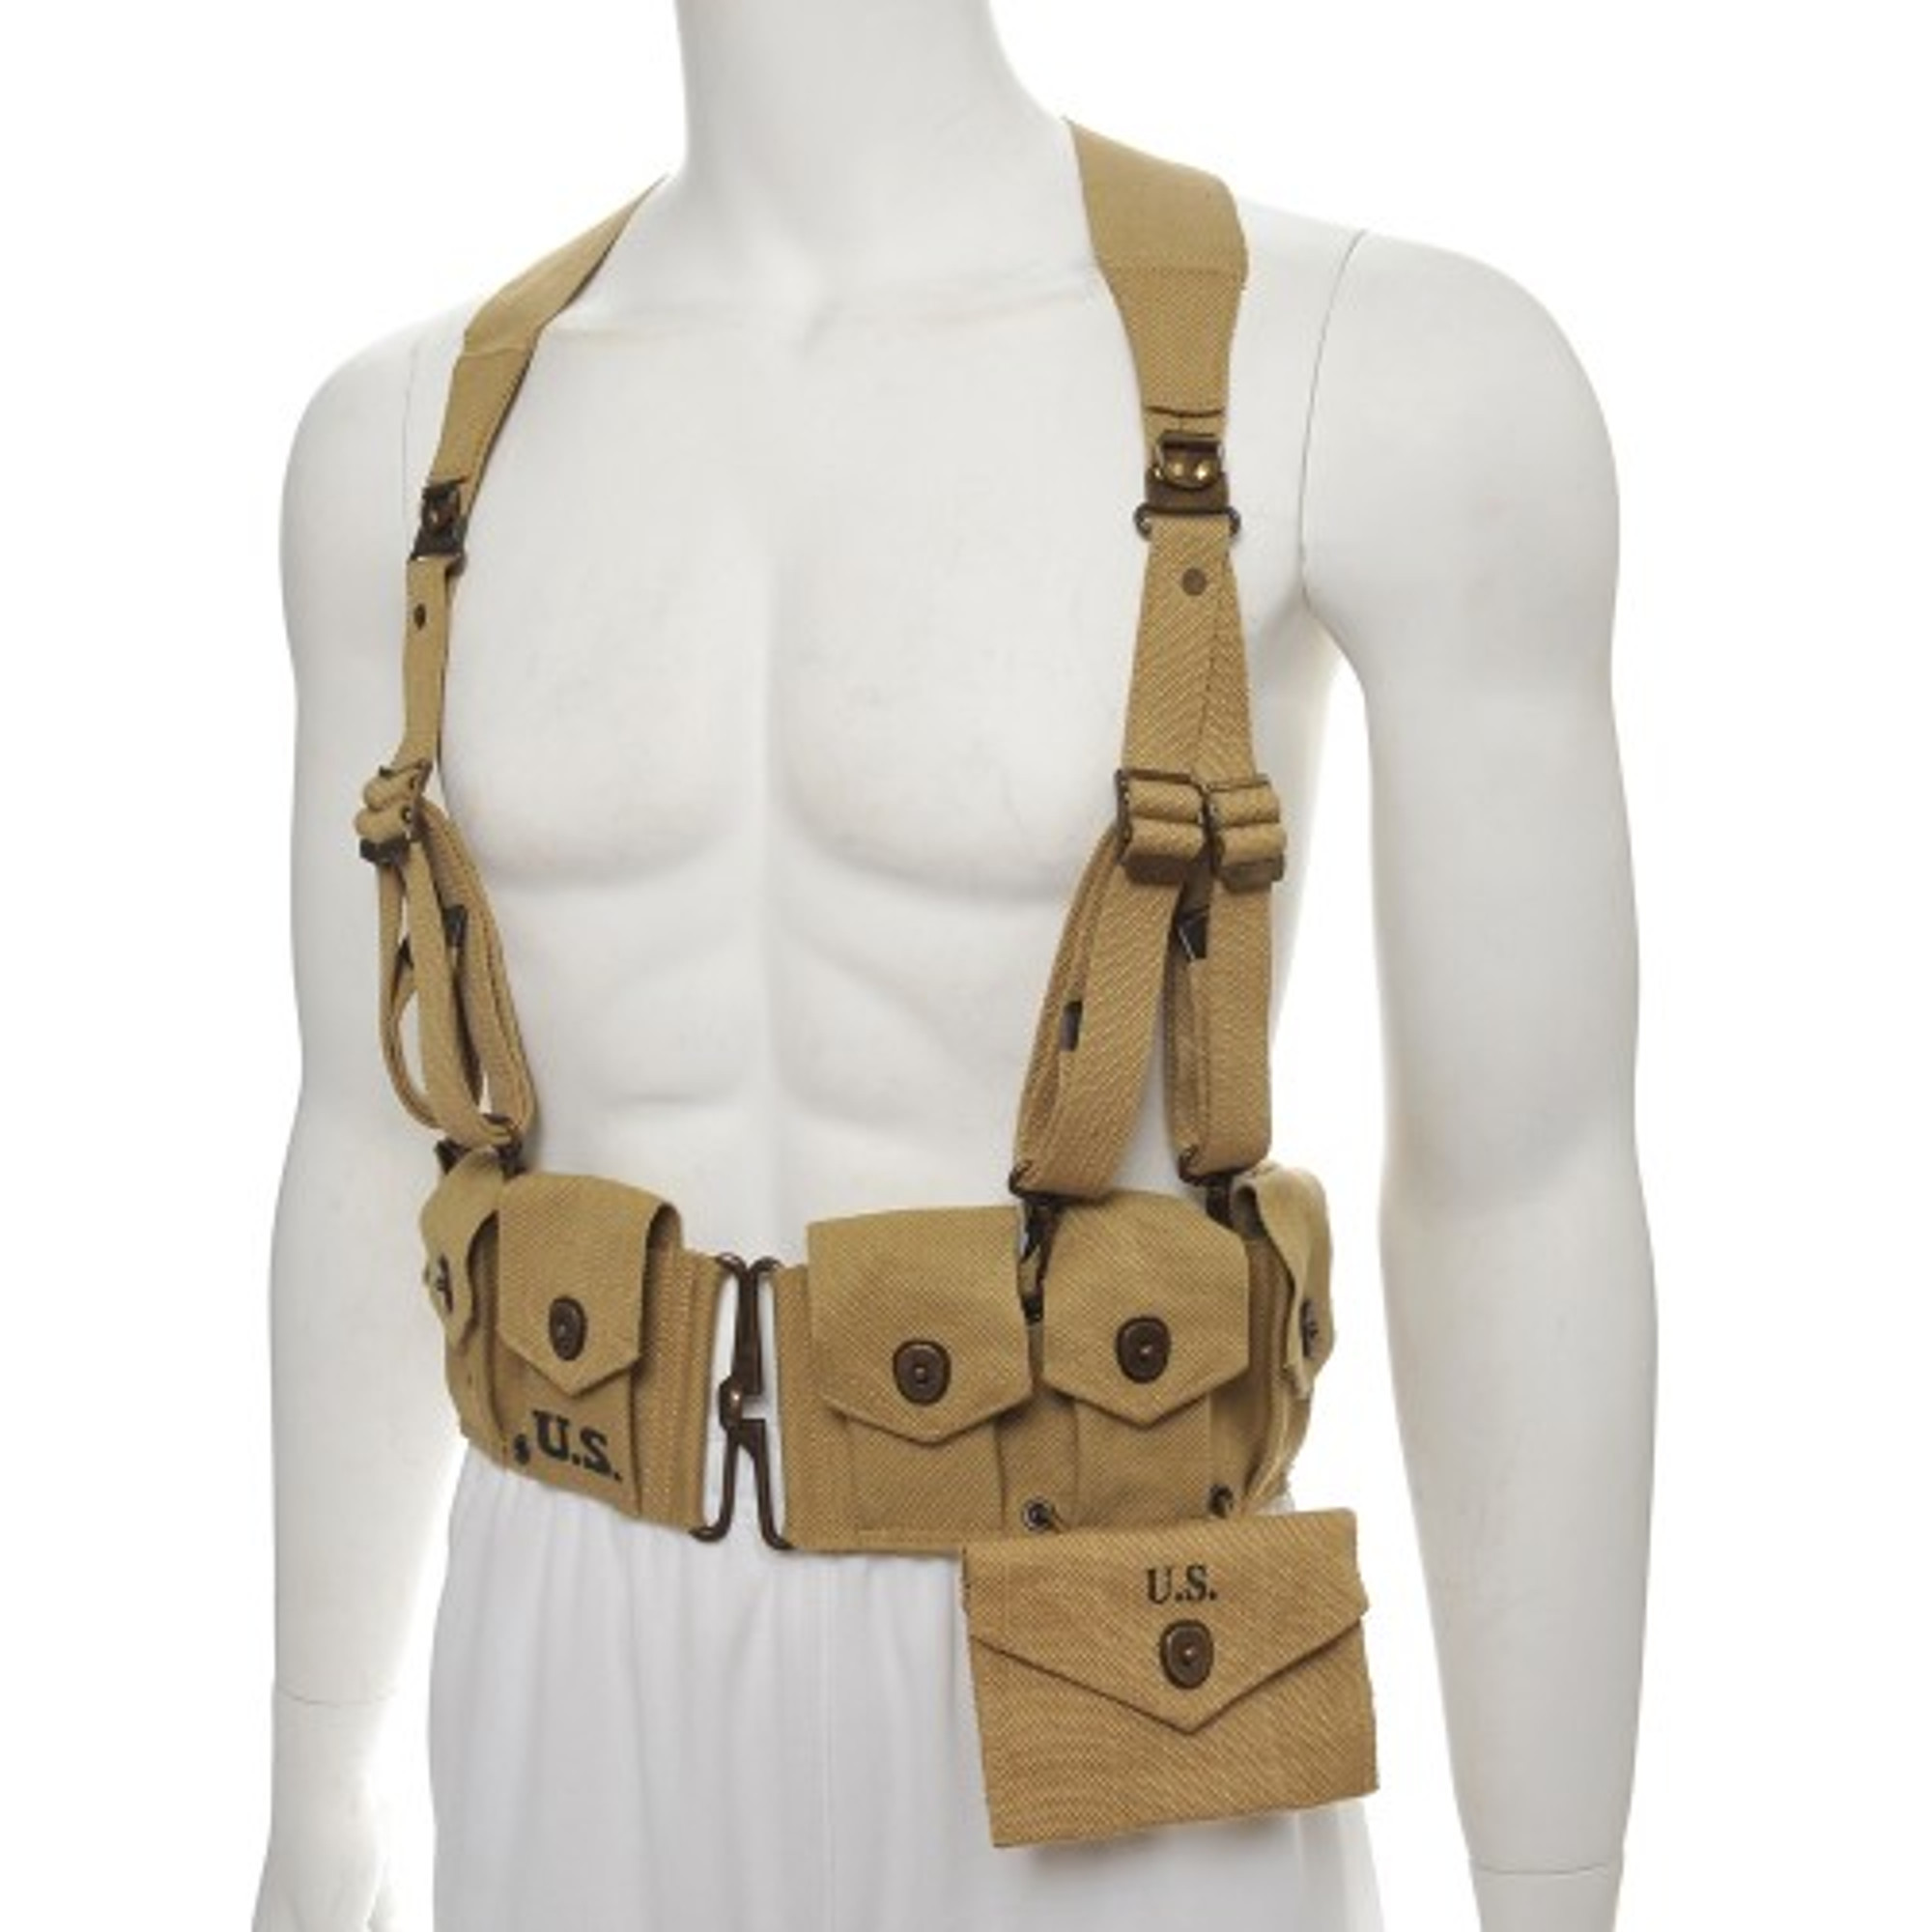 M1923 Garand Cartridge Belt, M1936 Suspenders & M1942 First Aid Pouch Marked JT&L 1942